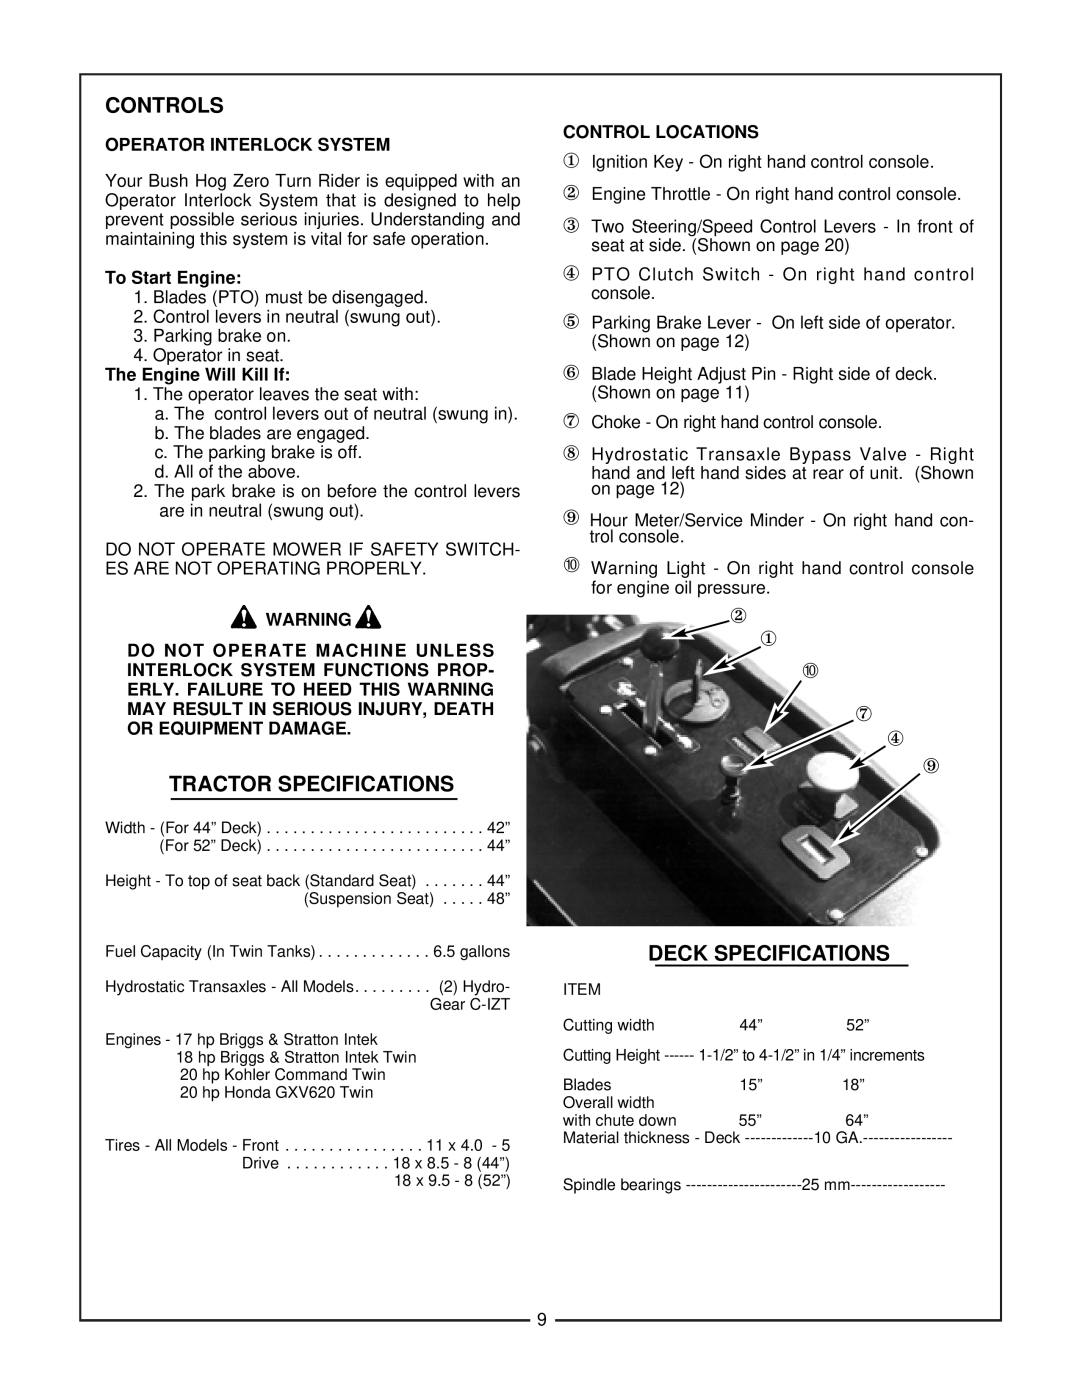 Bush Hog Estate Series manual Controls, Tractor Specifications, Deck Specifications, ② ① ➉ ⑦ ④ ⑨, Operator Interlock System 